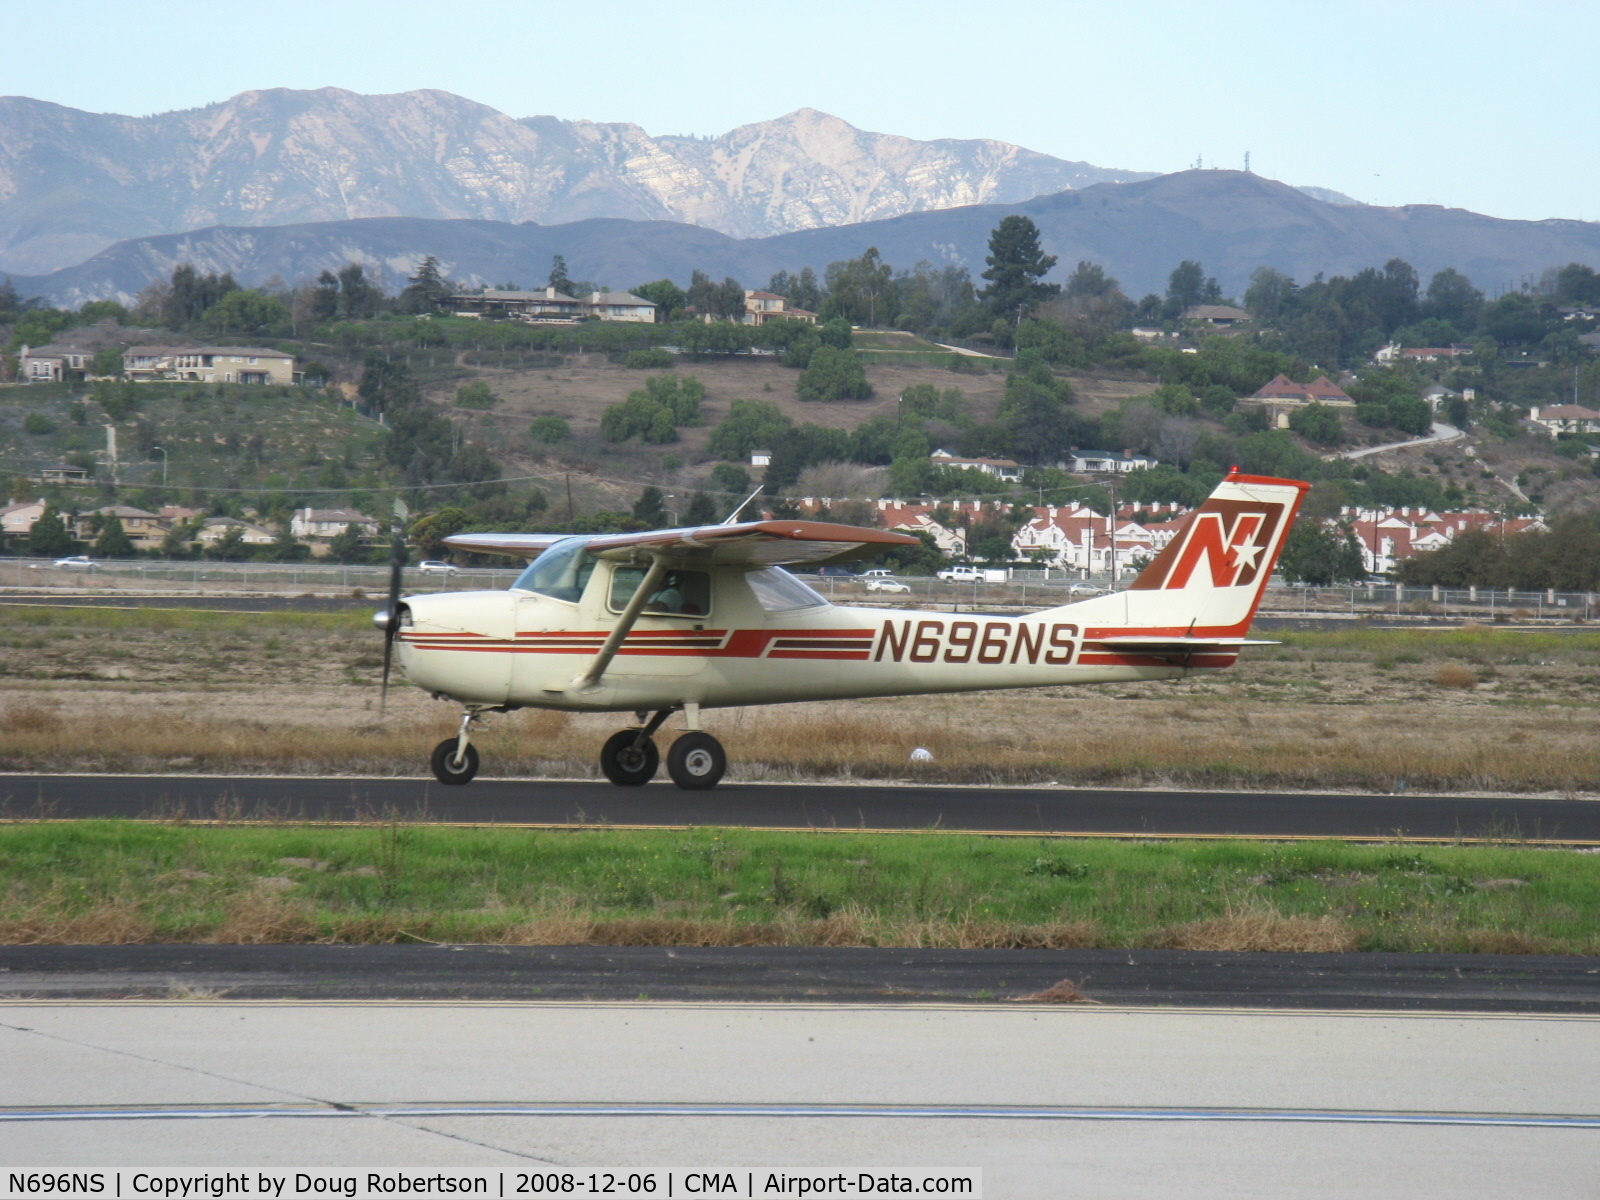 N696NS, 1968 Cessna 150H C/N 15068871, 1968 Cessna 150H 'North Star', Continental O-200 100 Hp, taxi to Rwy 26